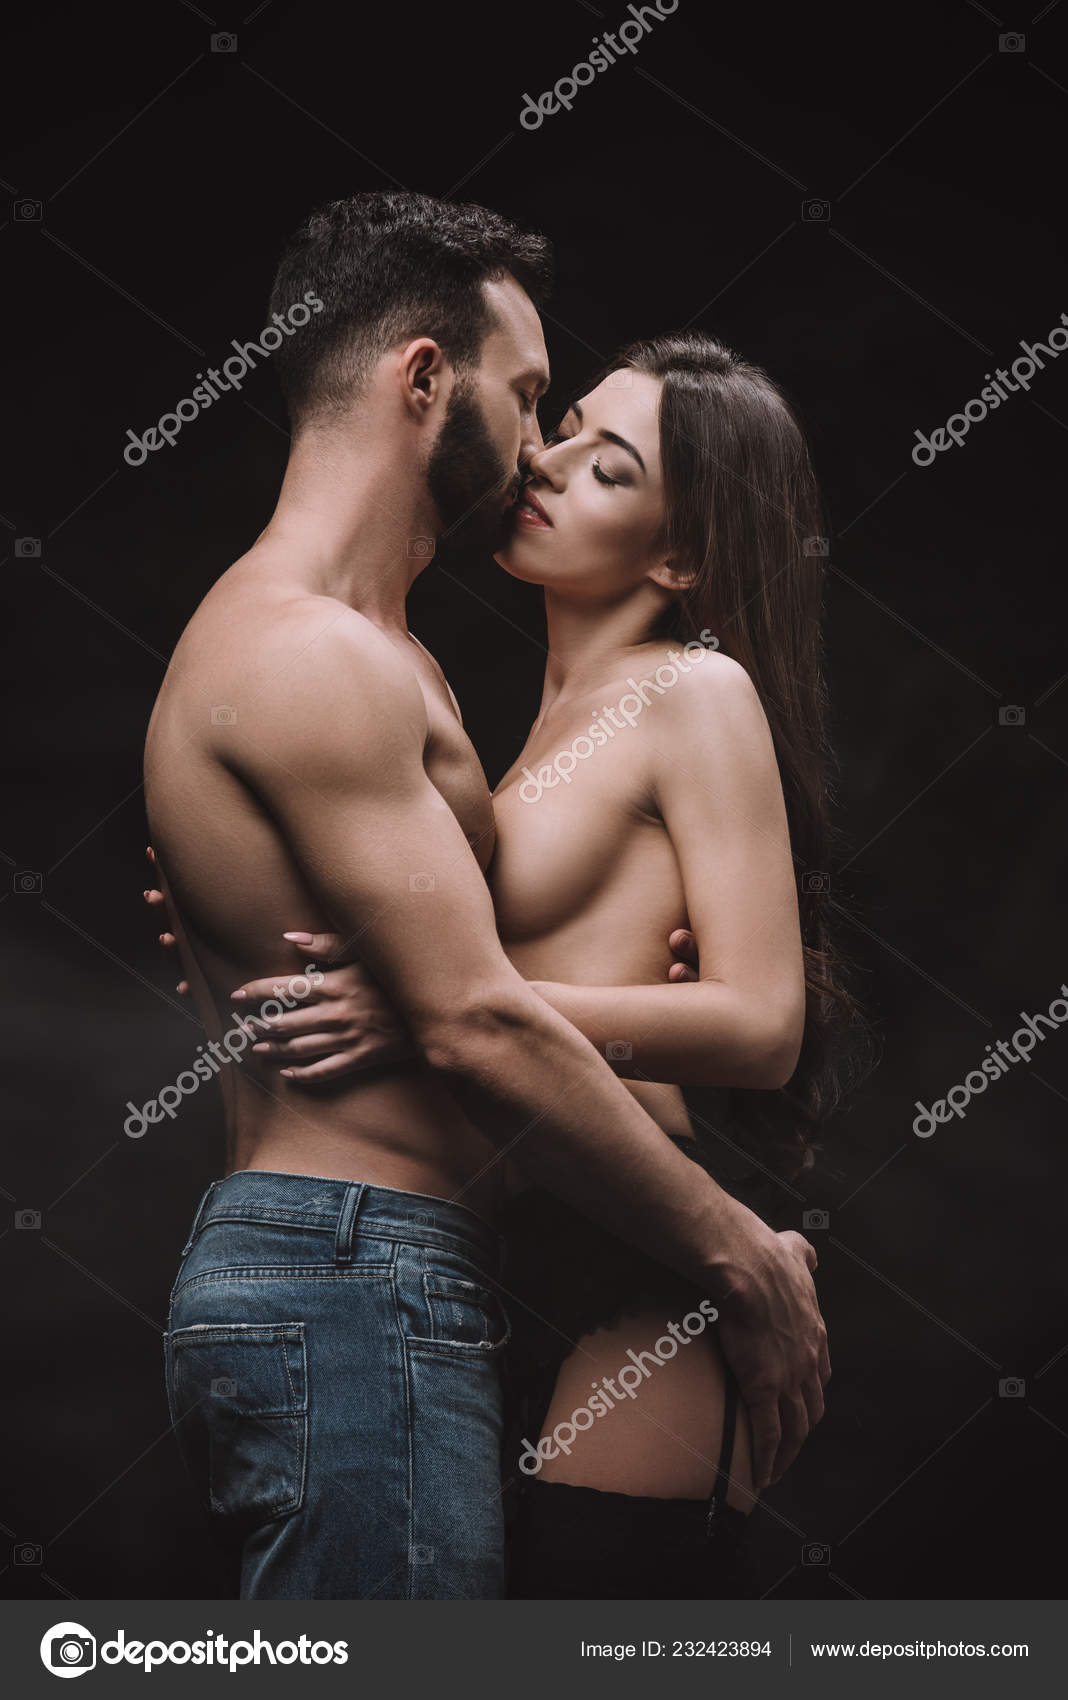 kissing and touching boyfriend girlfriend